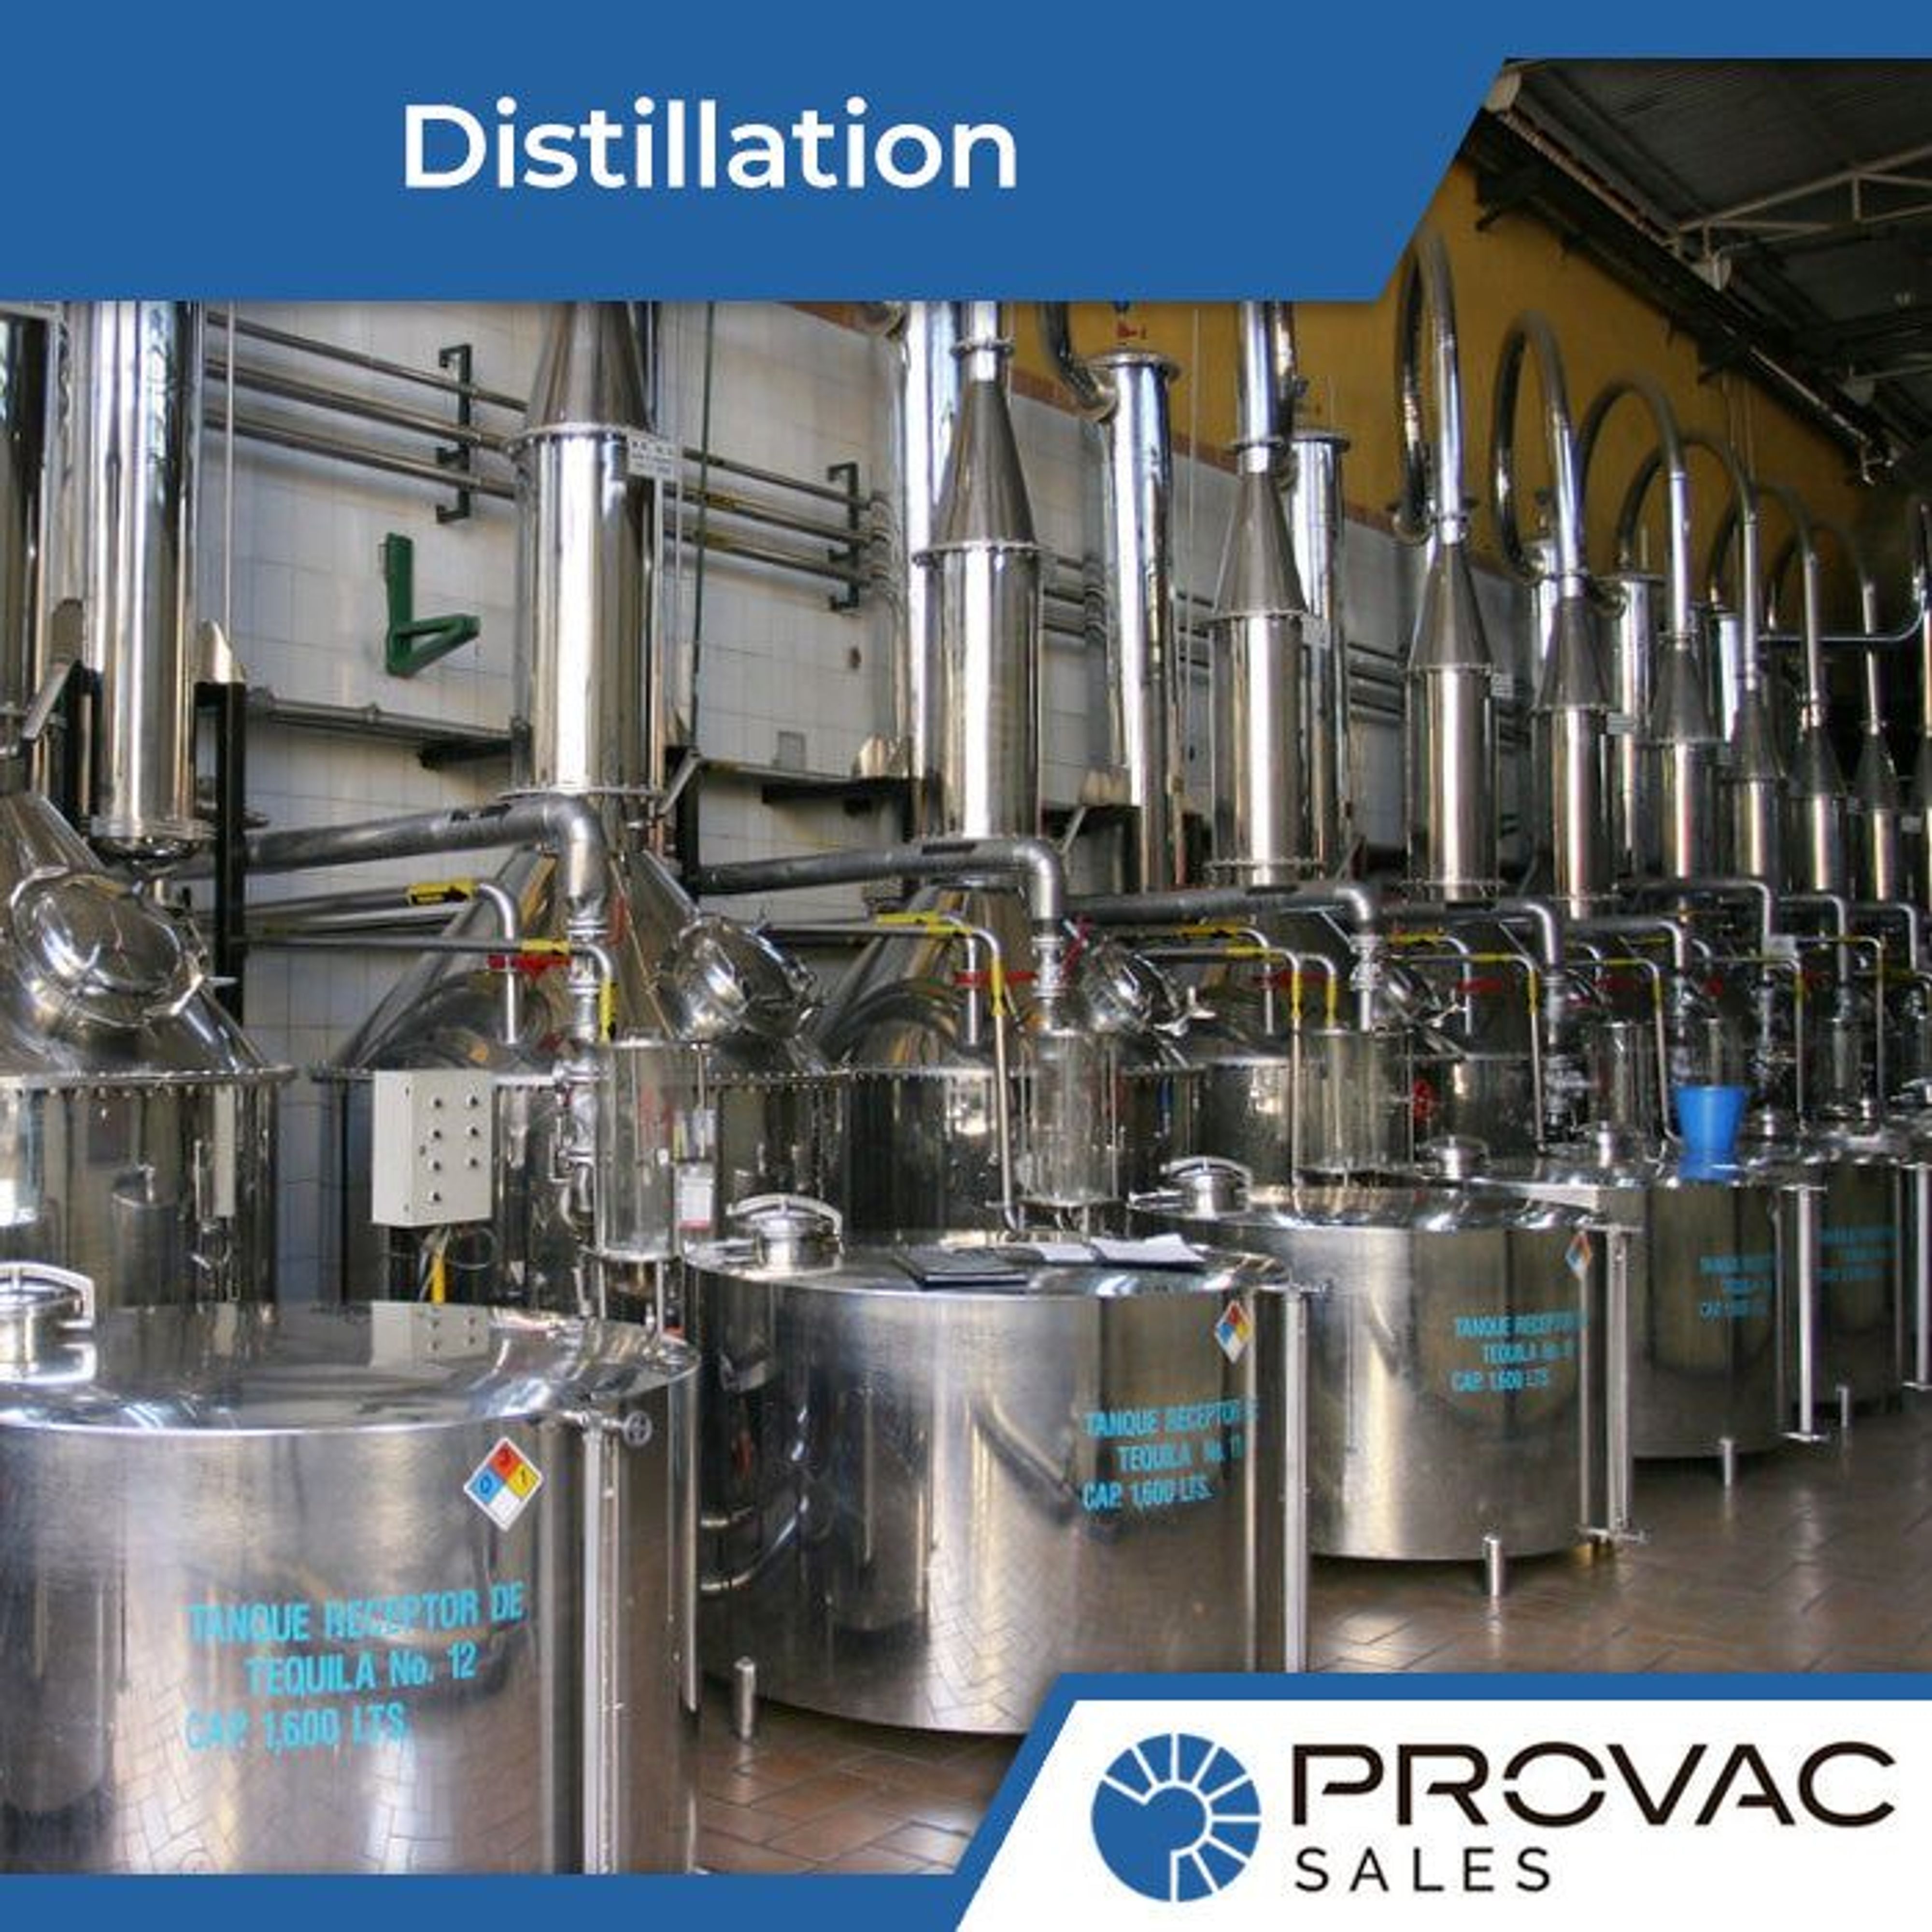 Vacuum Pumps for Distillation Background